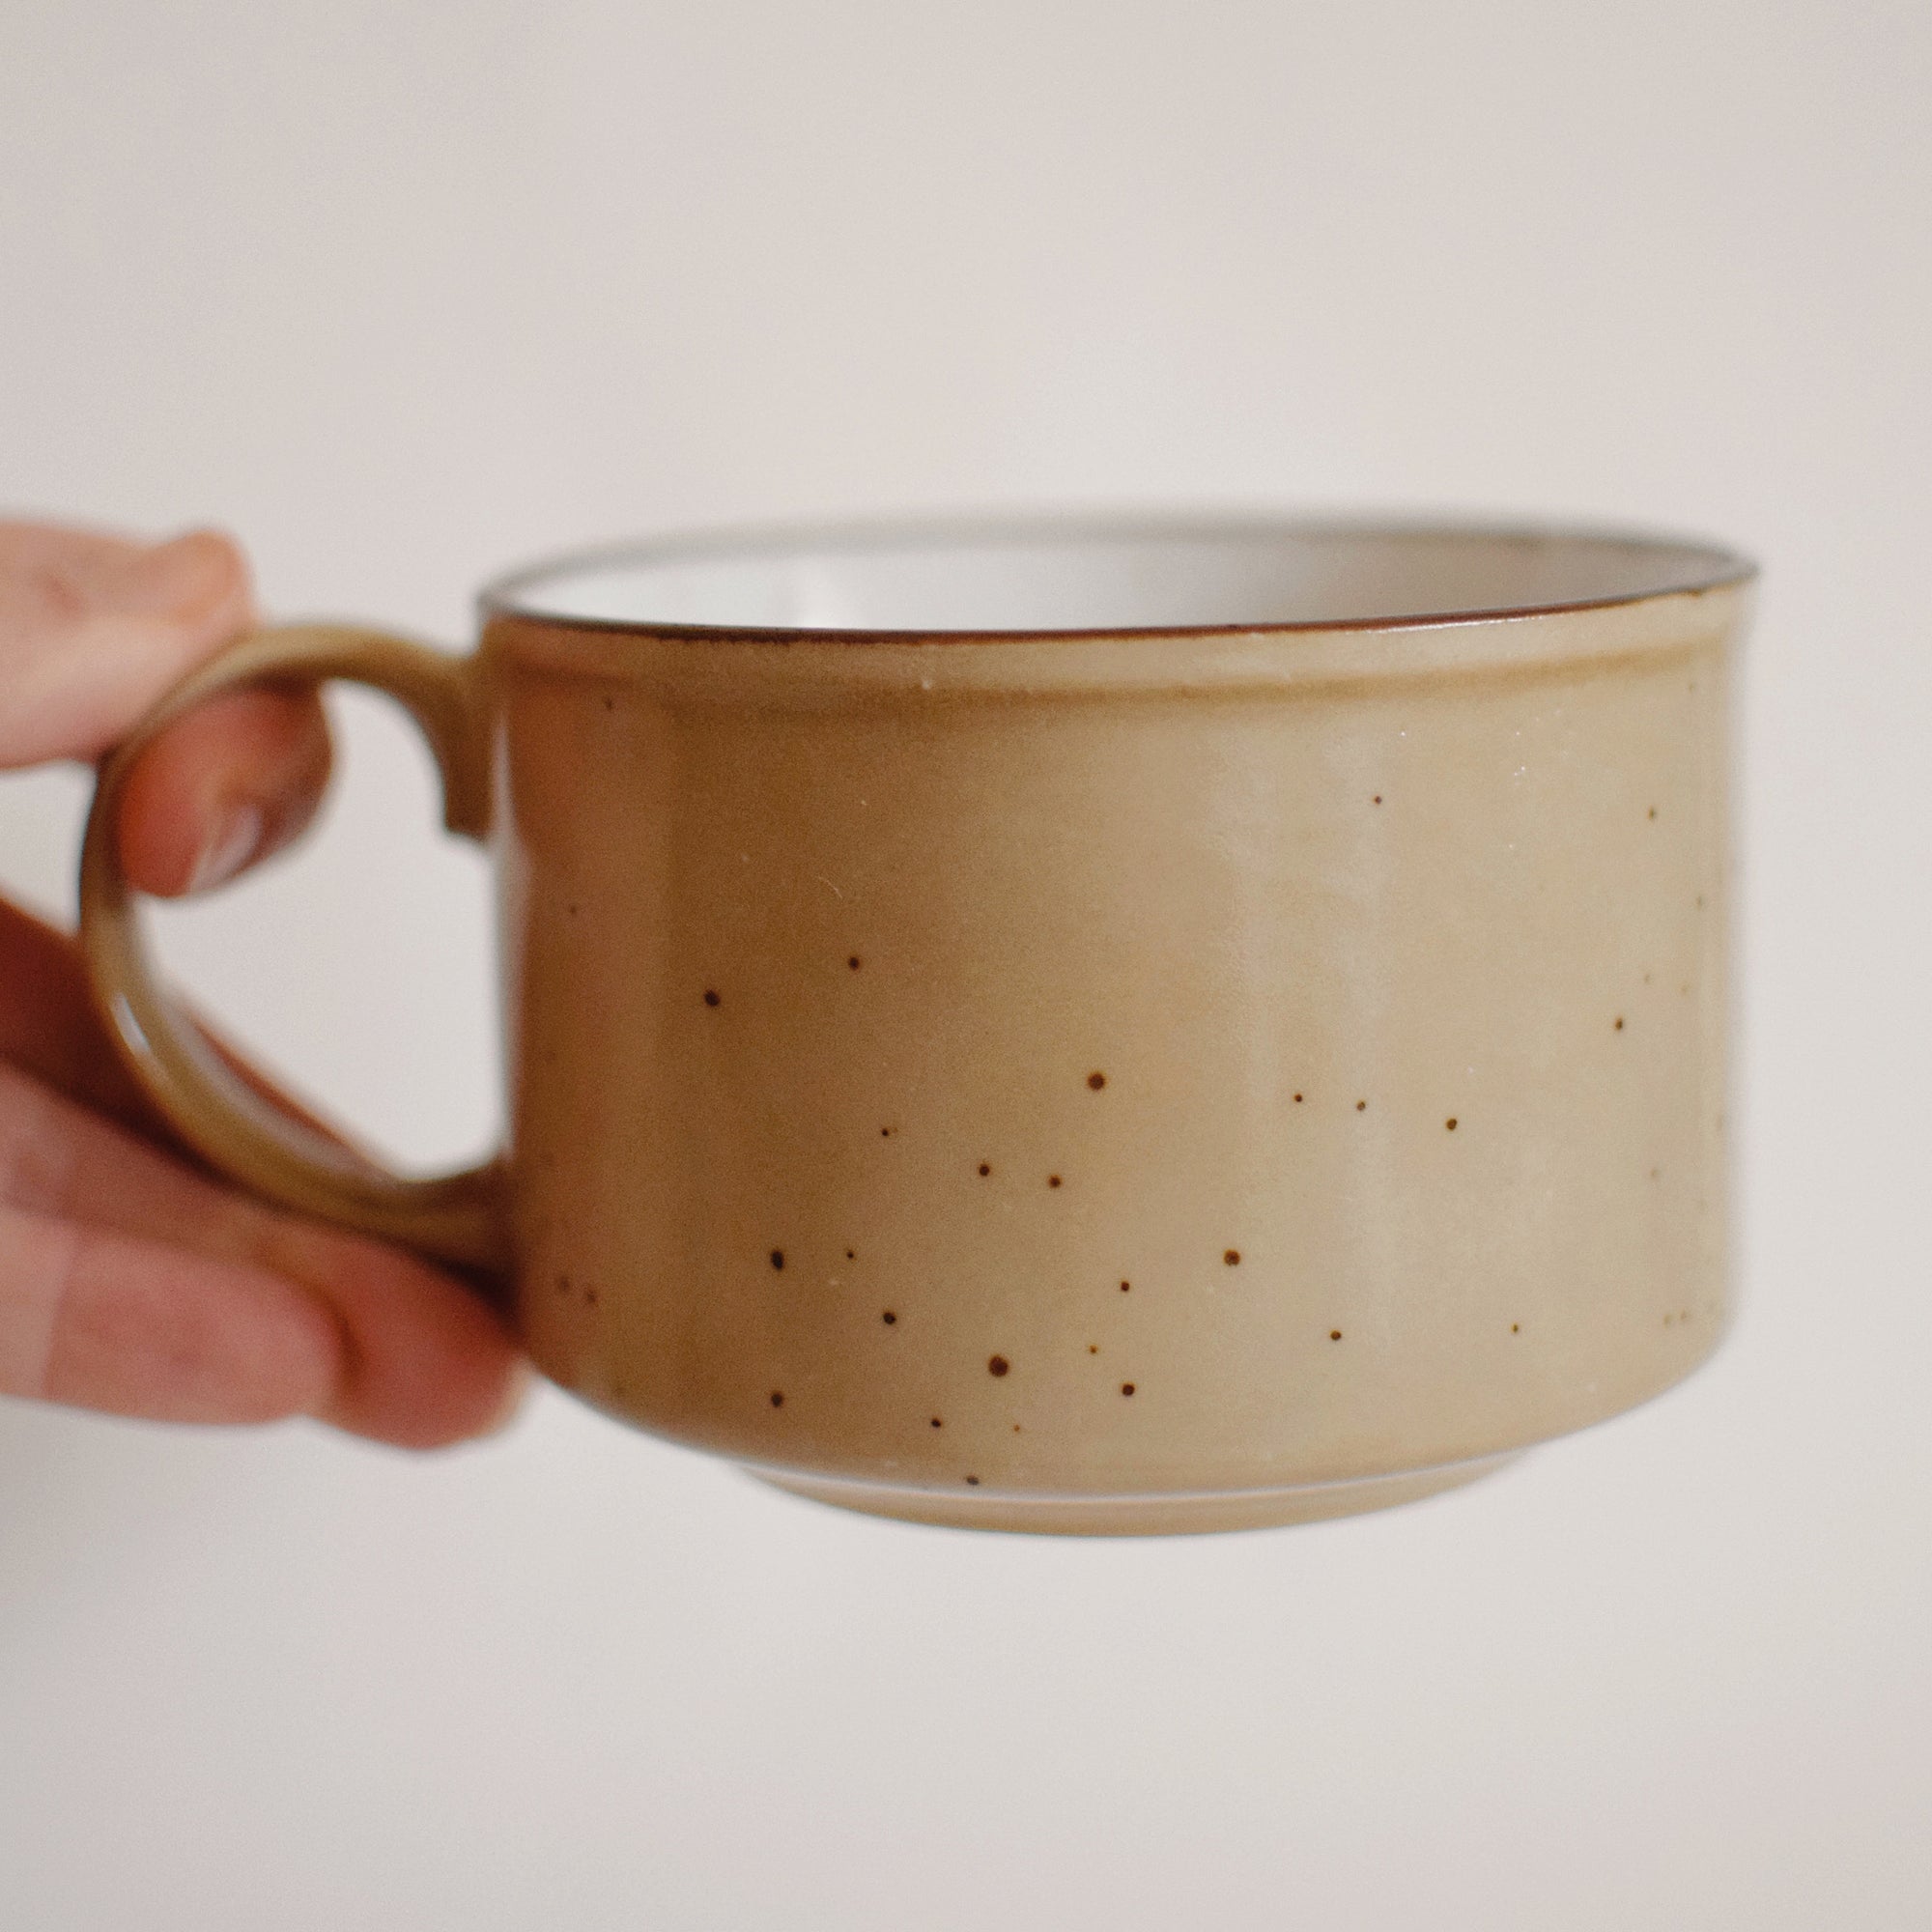 Thrifted Goods - Speckled Tan Campfire Mug